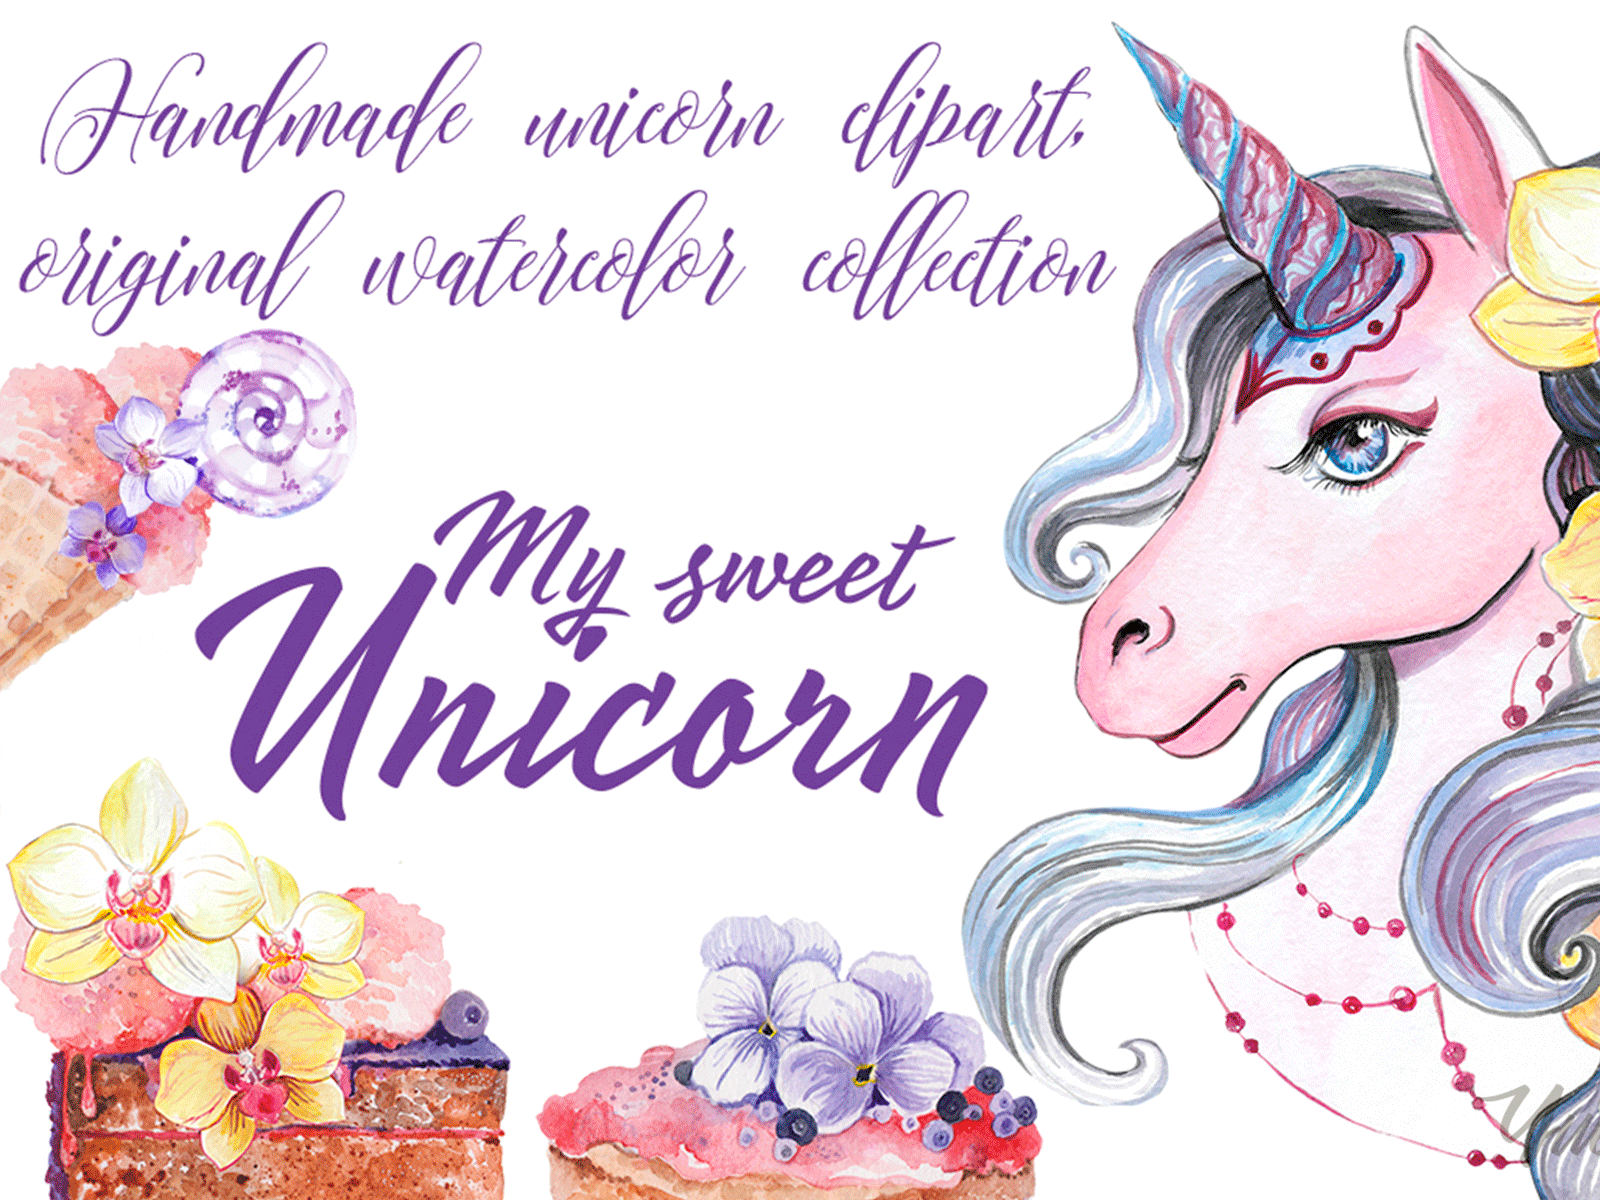 "My sweet unicorn" handpainted watercolor clipart